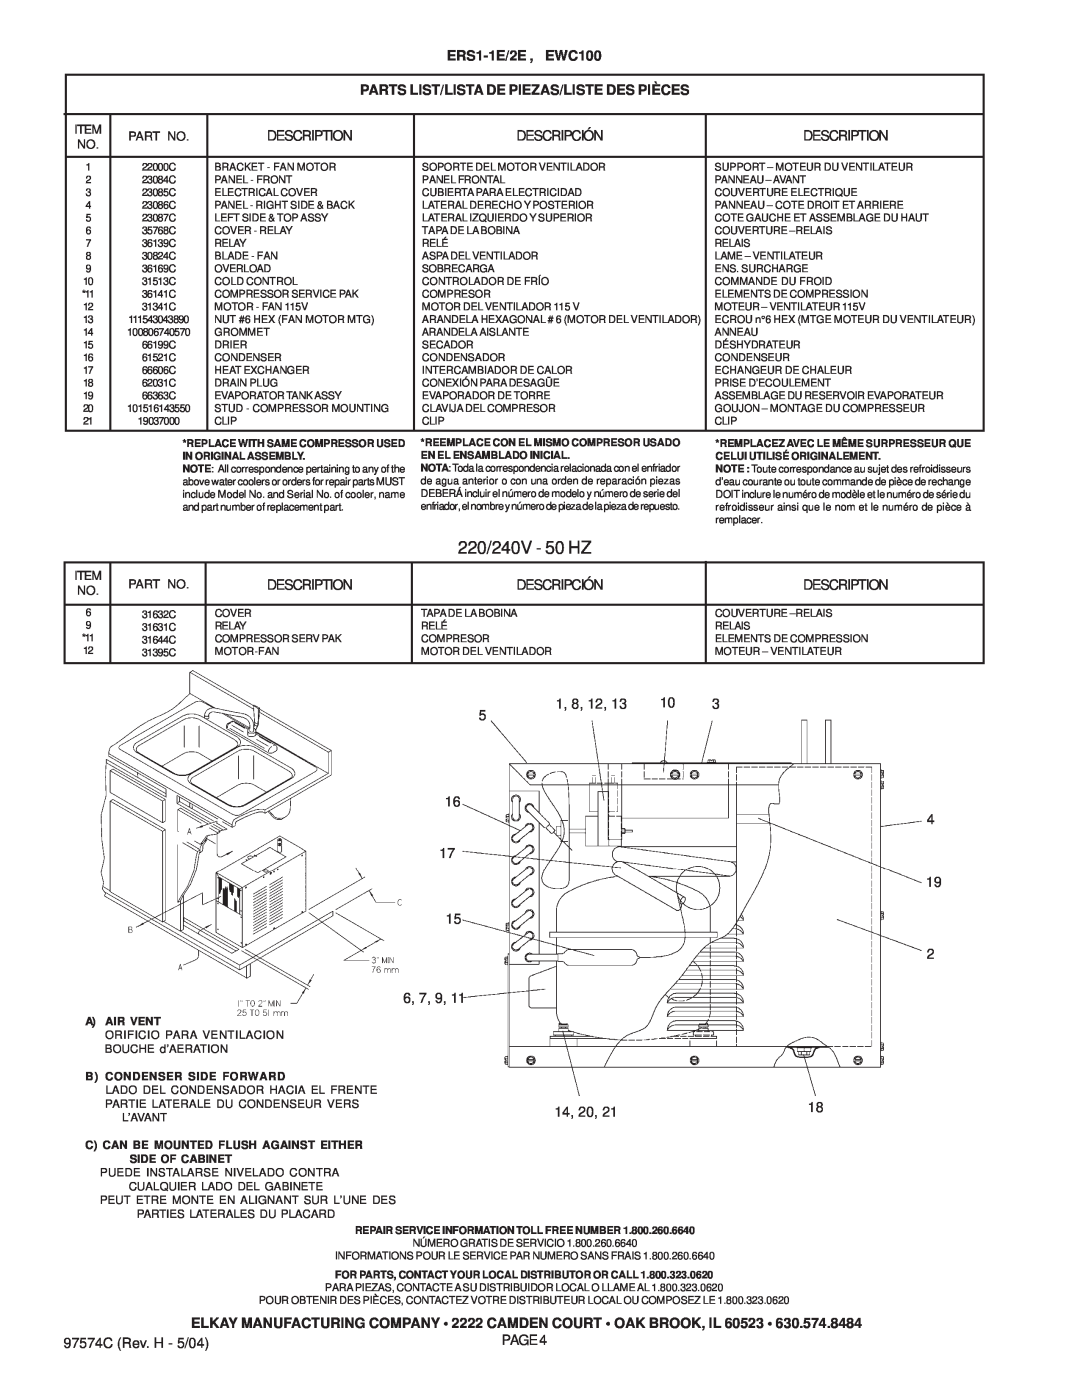 Elkay manual 220/240V - 50 HZ, ERS1-1E/2E ,EWC100, Parts List/Lista De Piezas/Liste Des Pièces 